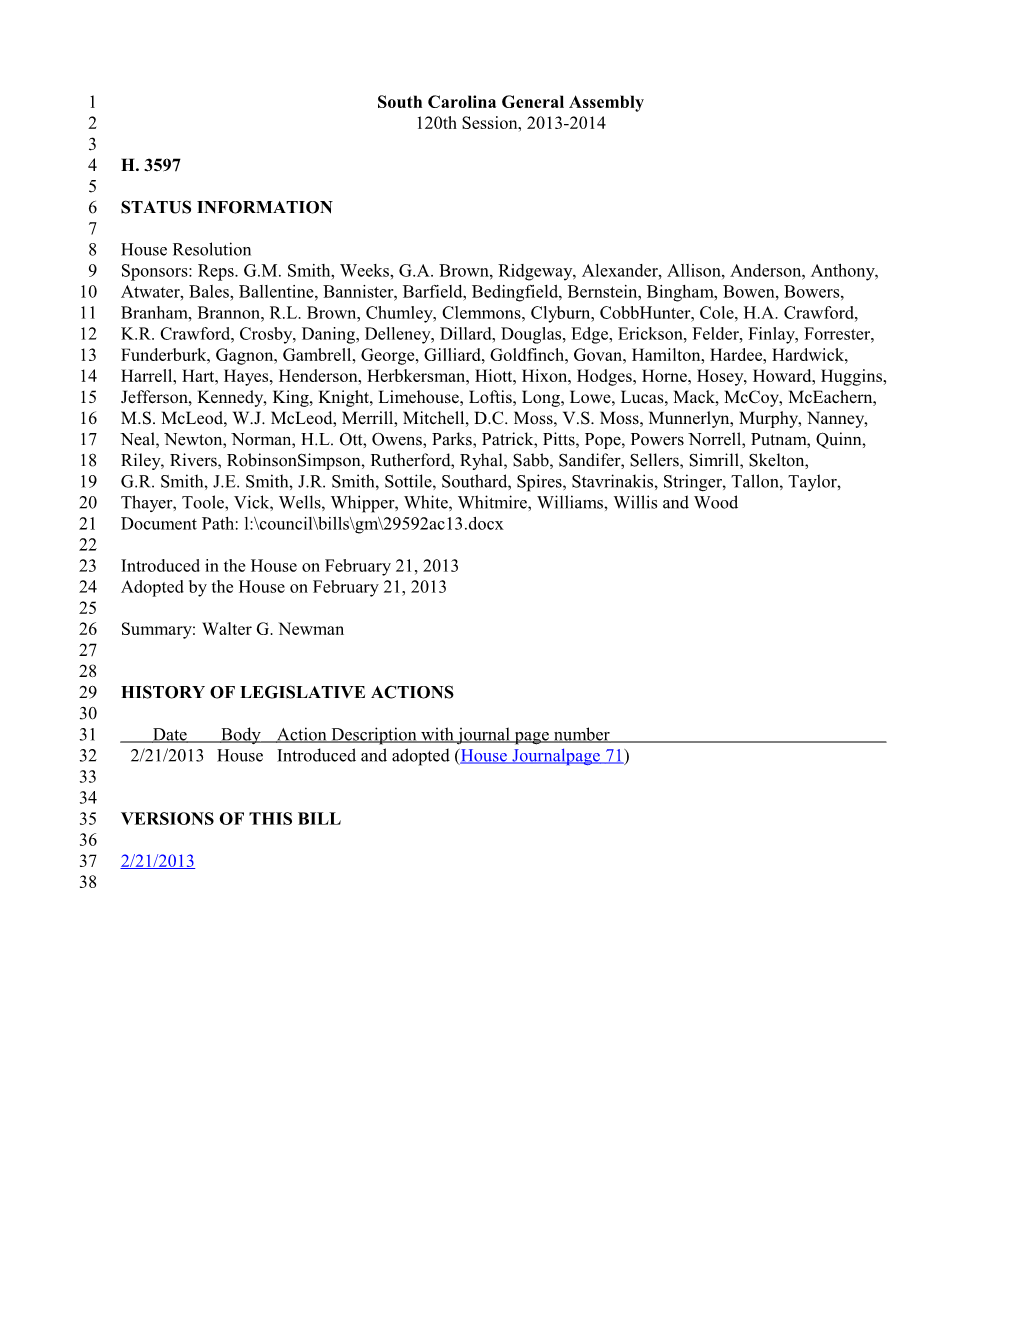 2013-2014 Bill 3597: Walter G. Newman - South Carolina Legislature Online